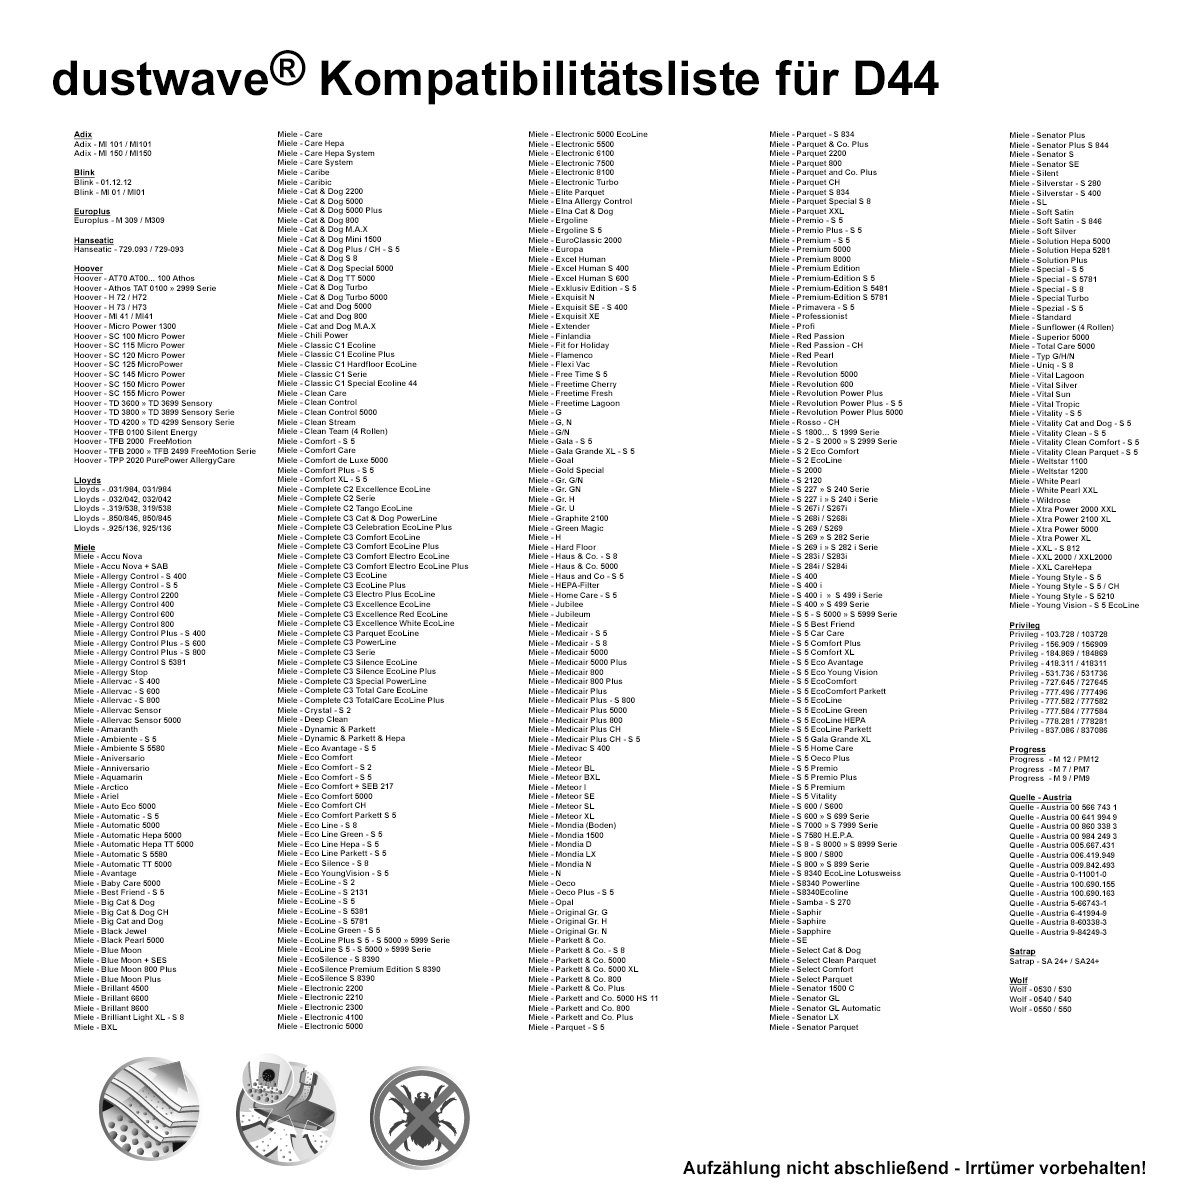 - Dustwave 1 M11, AmazonBasics passend - (ca. + AmazonBasics für Staubsaugerbeutel 1 Test-Set, Staubsaugerbeutel 1 zuschneidbar) 15x15cm Hepa-Filter St., Test-Set, Standard M11